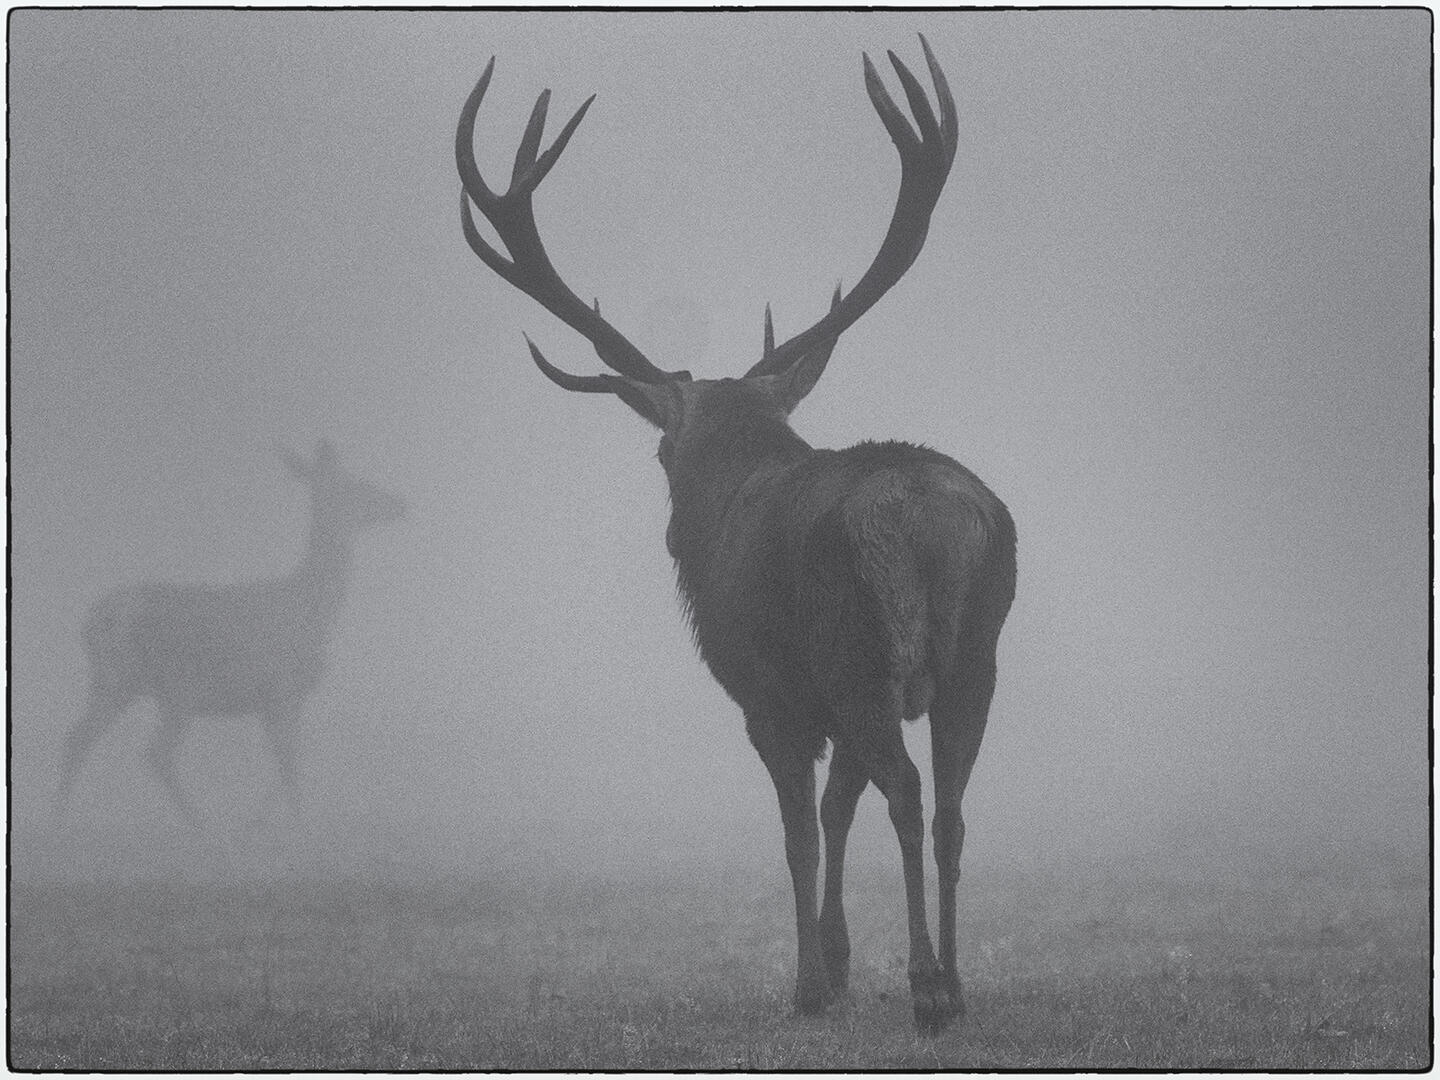 Fog - Landscape photo contest | Photocrowd photo competitions ...